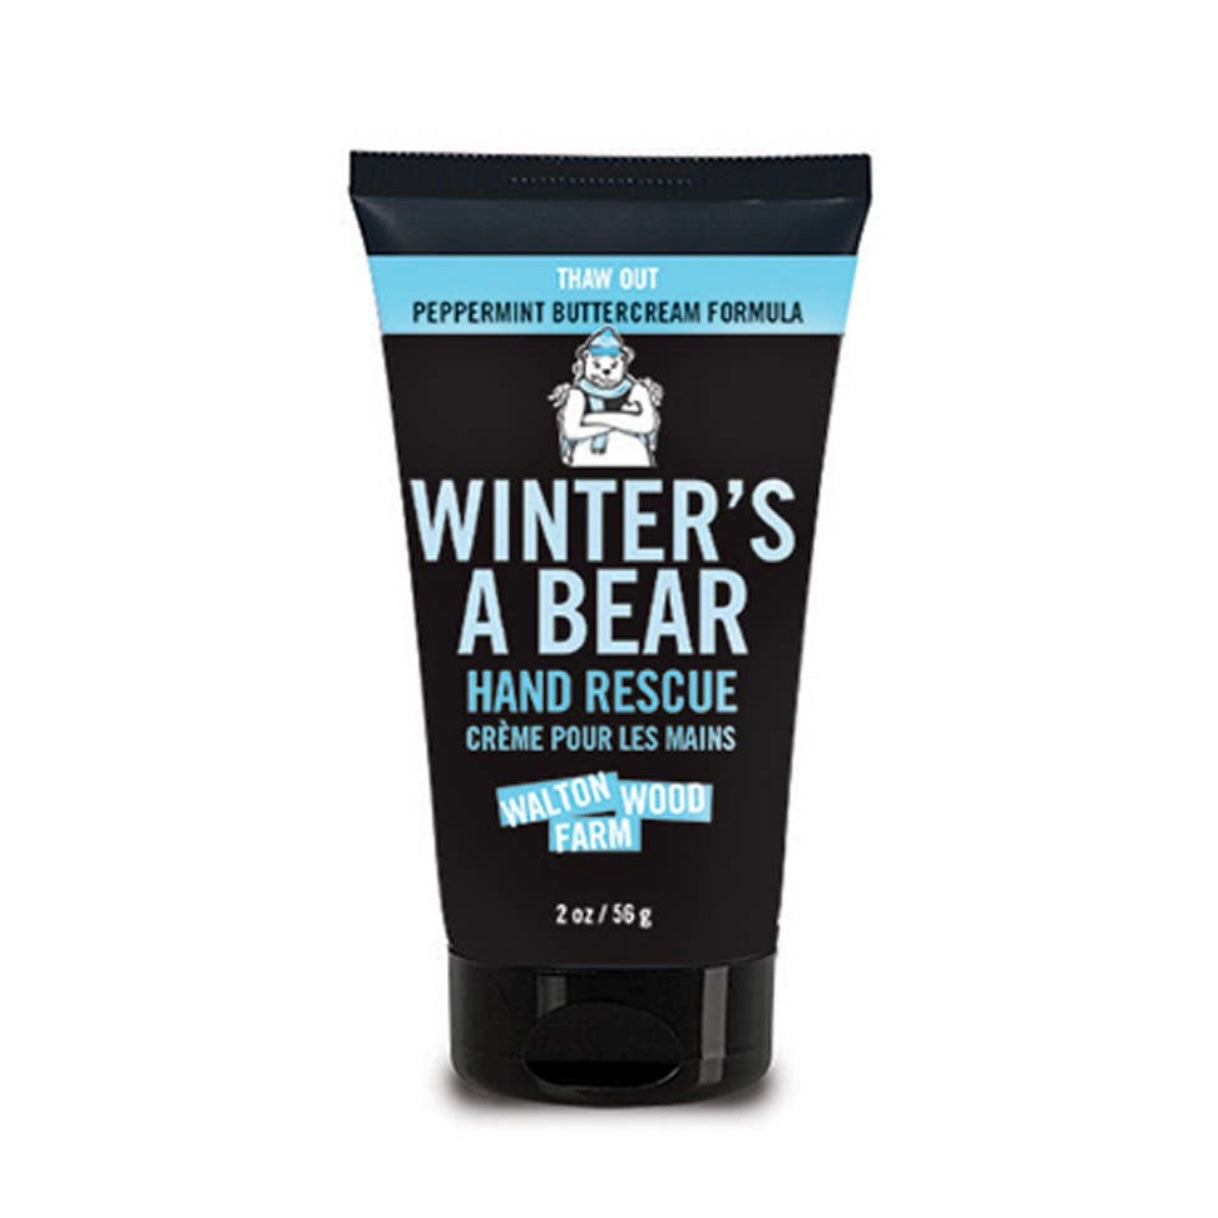 Winter's a Bear Hand Rescue